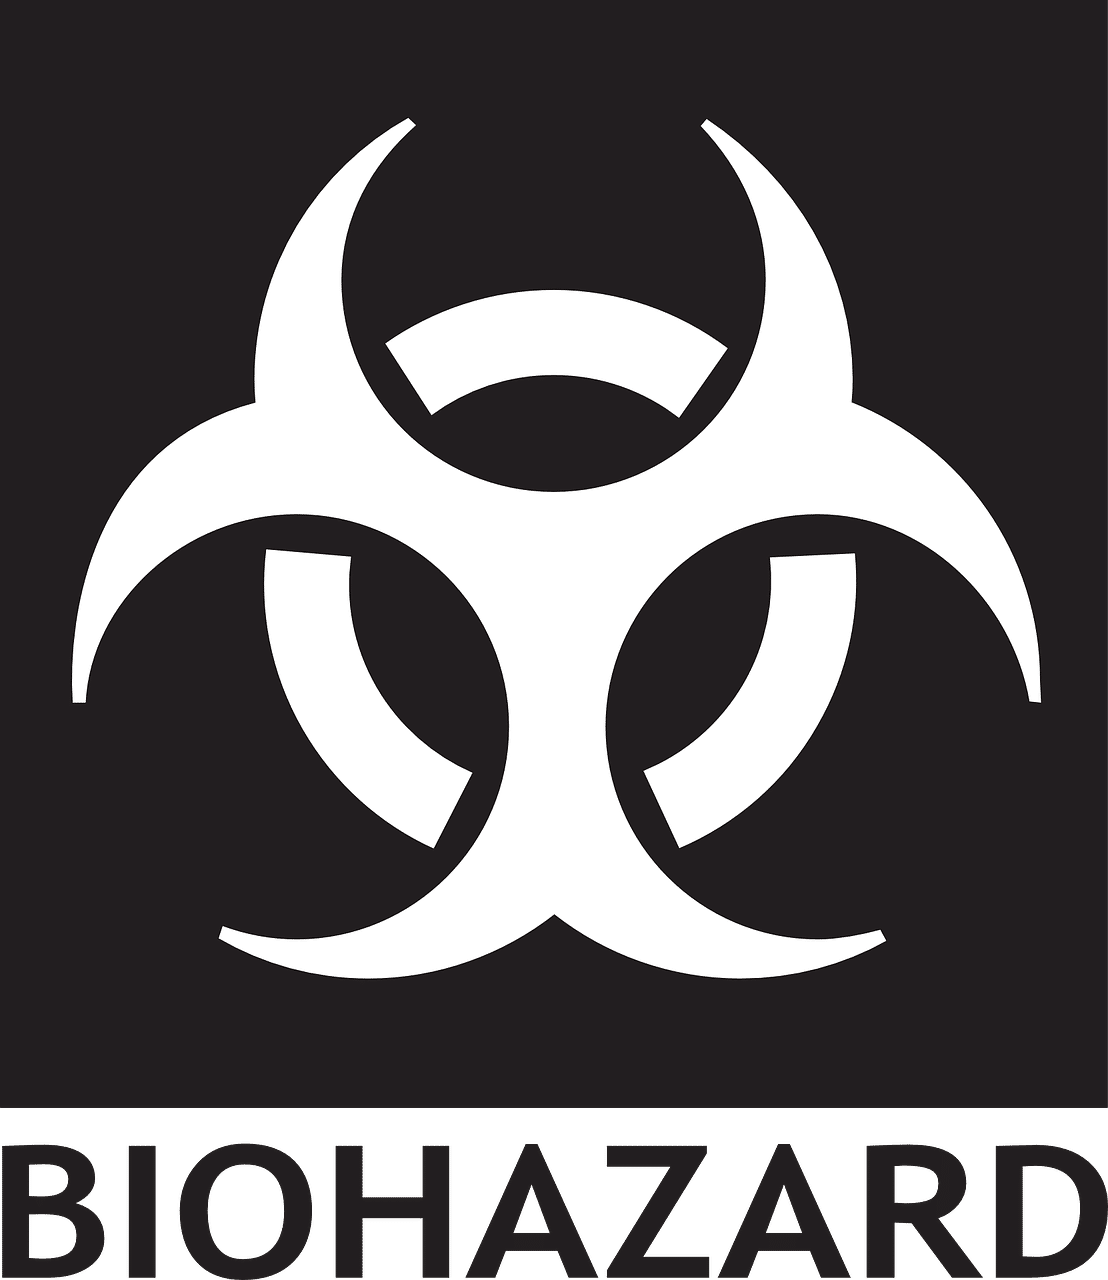 Why Do We Use Biohazard Bags?